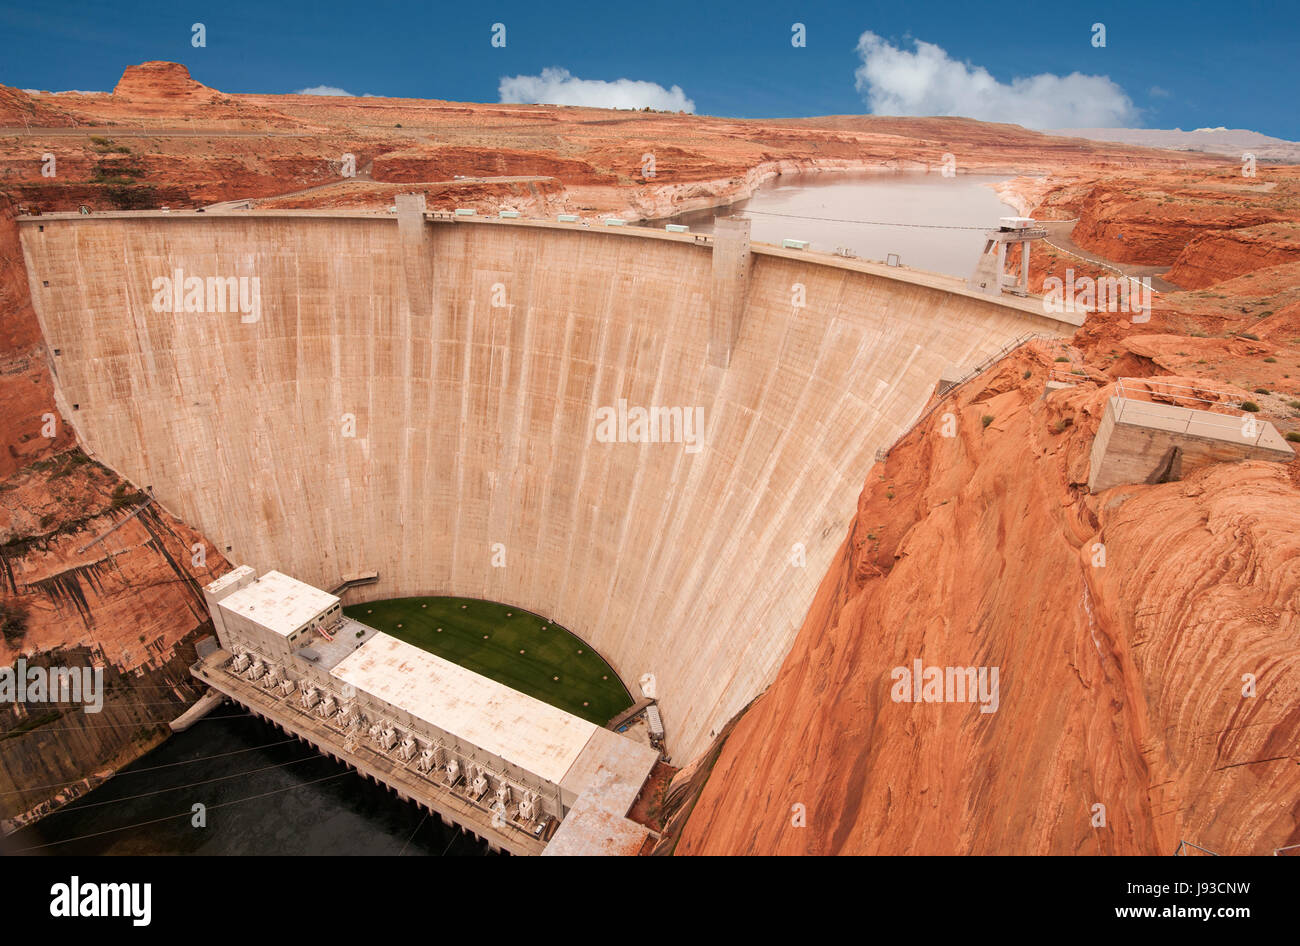 North America; United States; Arizona; Desert; Colorado River; Lake Powell; Glen Canyon Dam; 710 feet high; Desert; Hydroelectric. Stock Photo